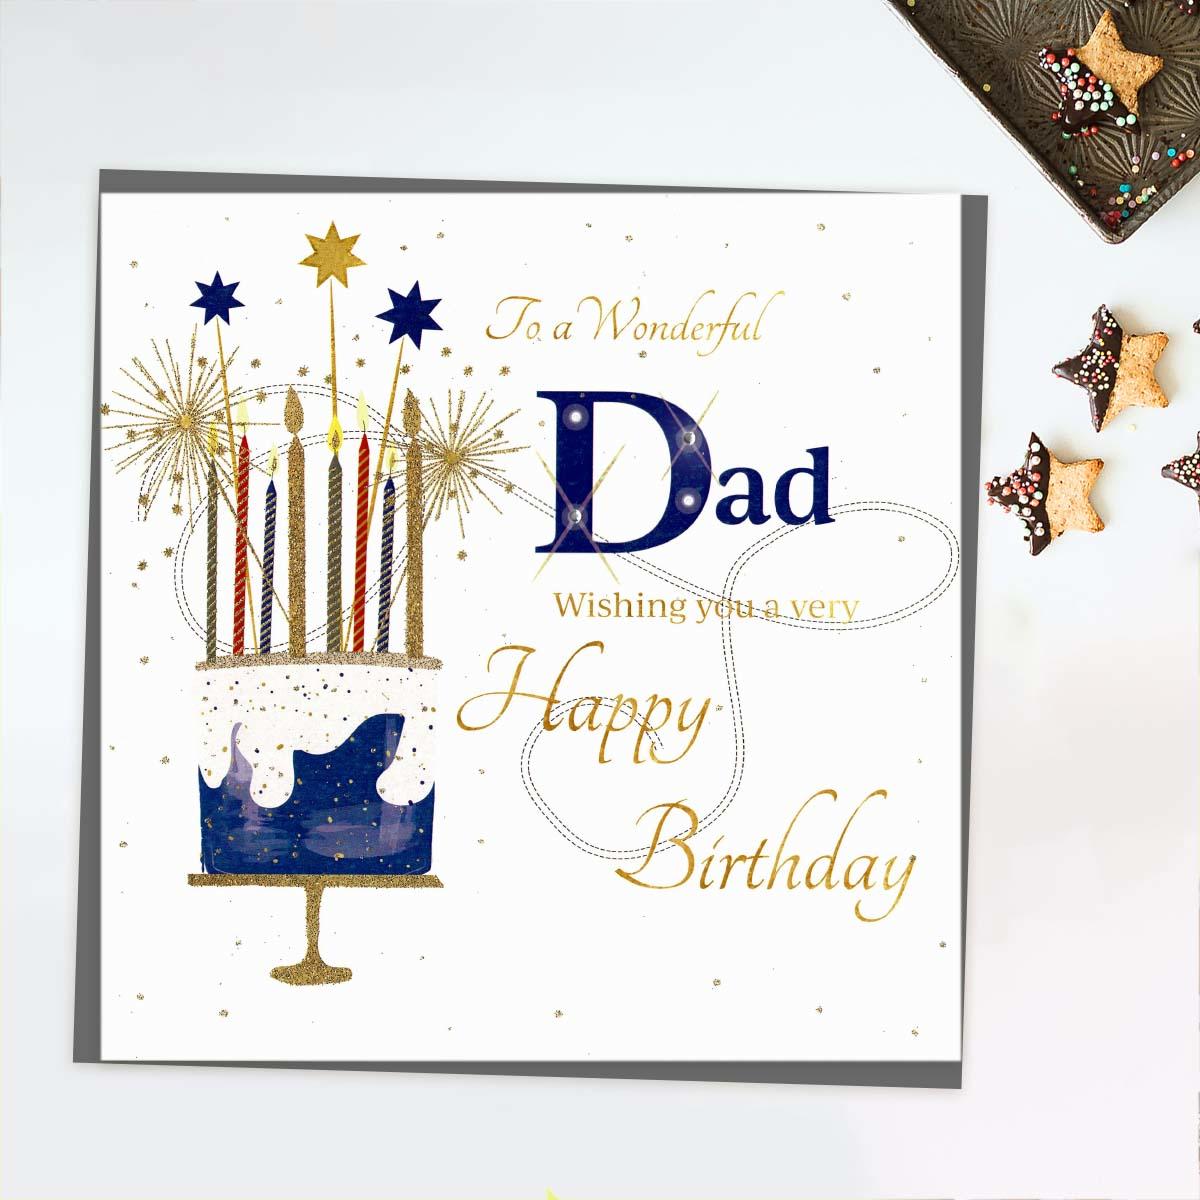 New England - Wonderful Dad Birthday Large Card Front Image